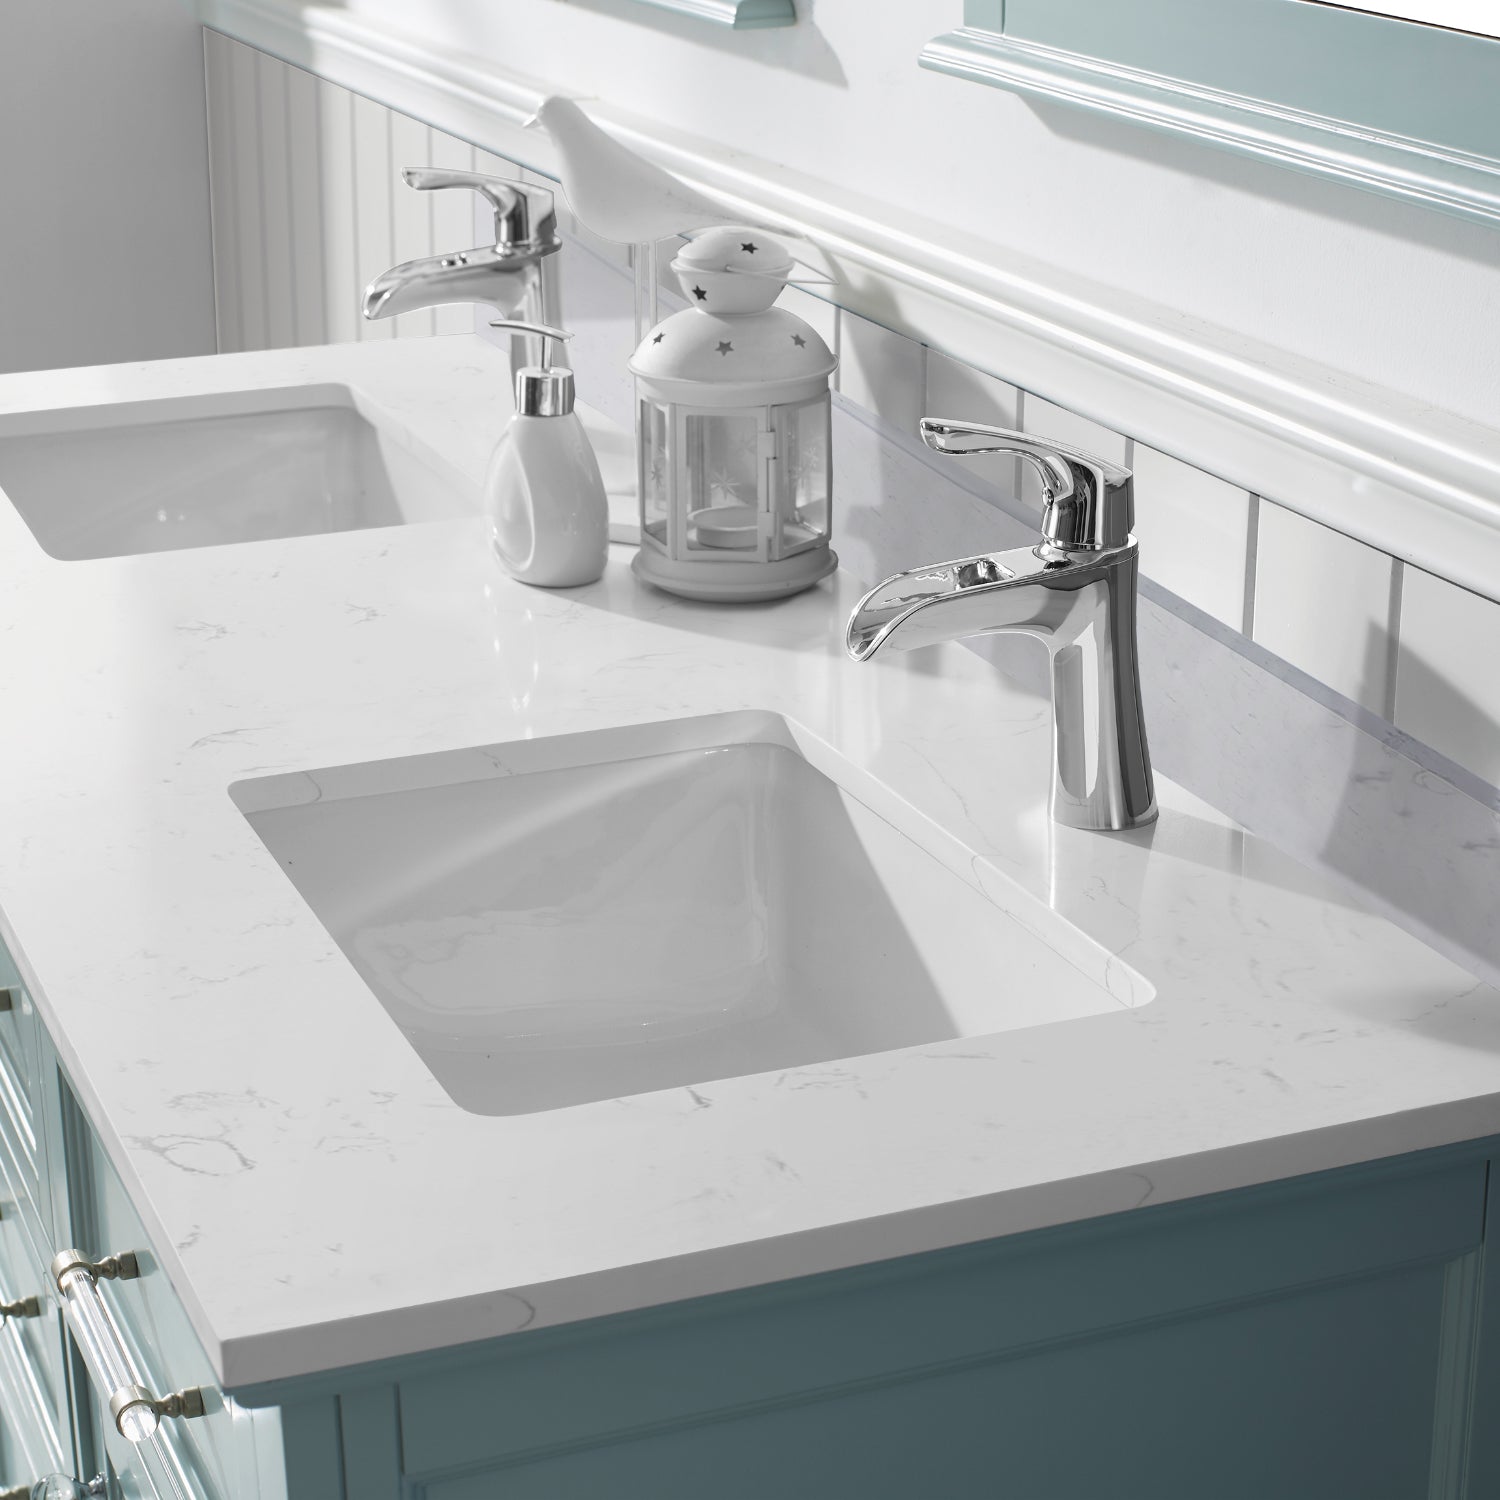 Vinnova Lorna 60" Bathroom Double Vanity Set in Green & Composite Carrara White Stone Countertop | 783060-FG-WS